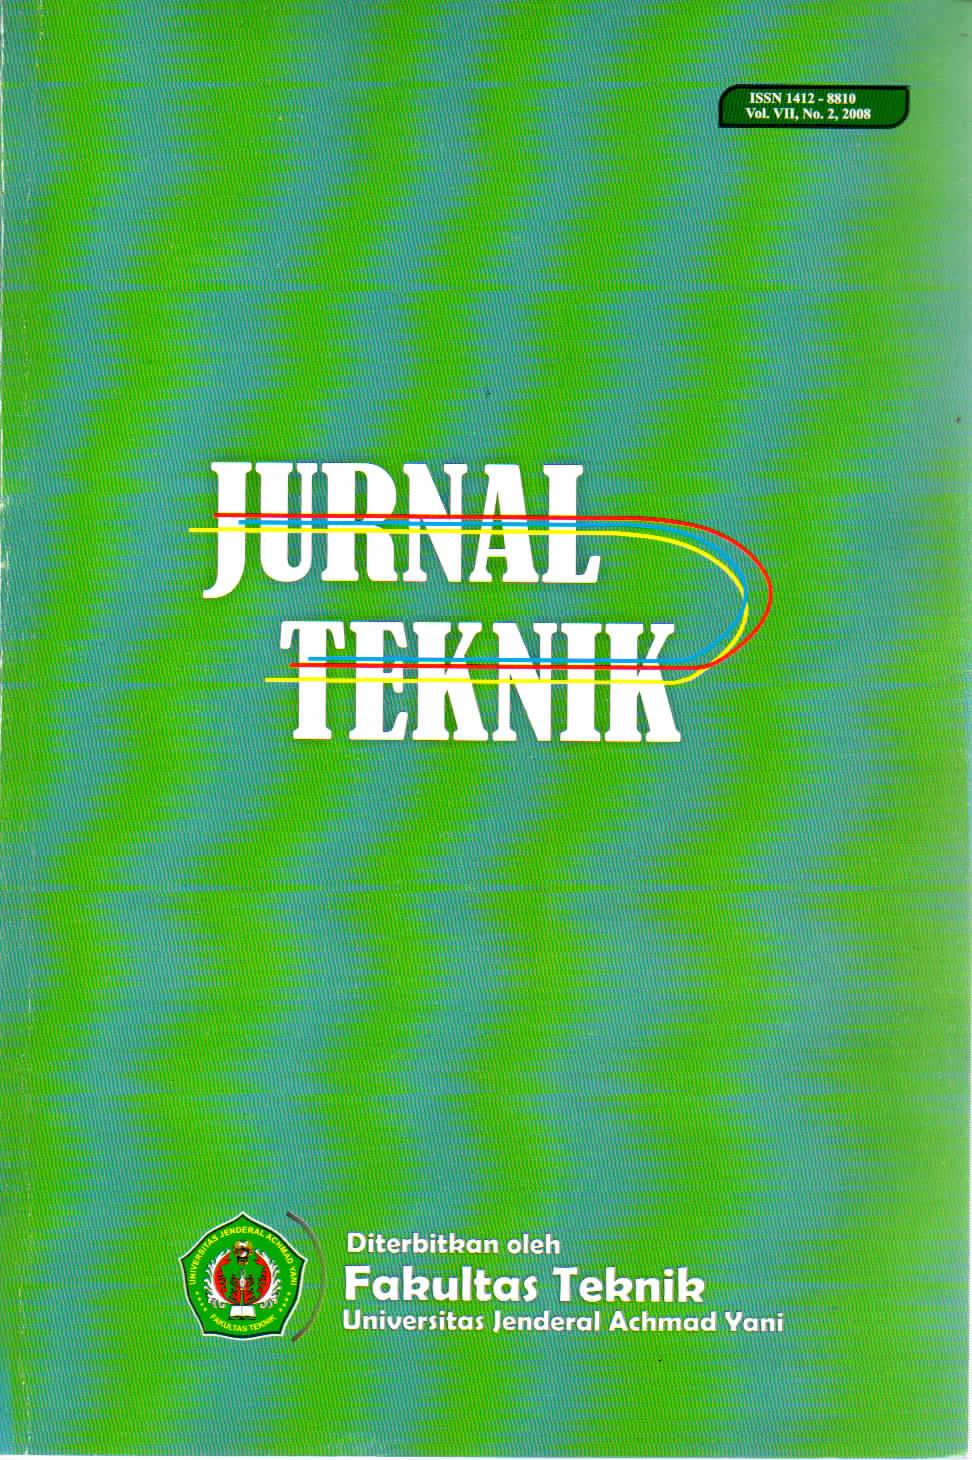 					View Vol. 7 No. 2 (2008): Jurnal Teknik - Media Pengembangan Ilmu dan Aplikasi Teknik
				